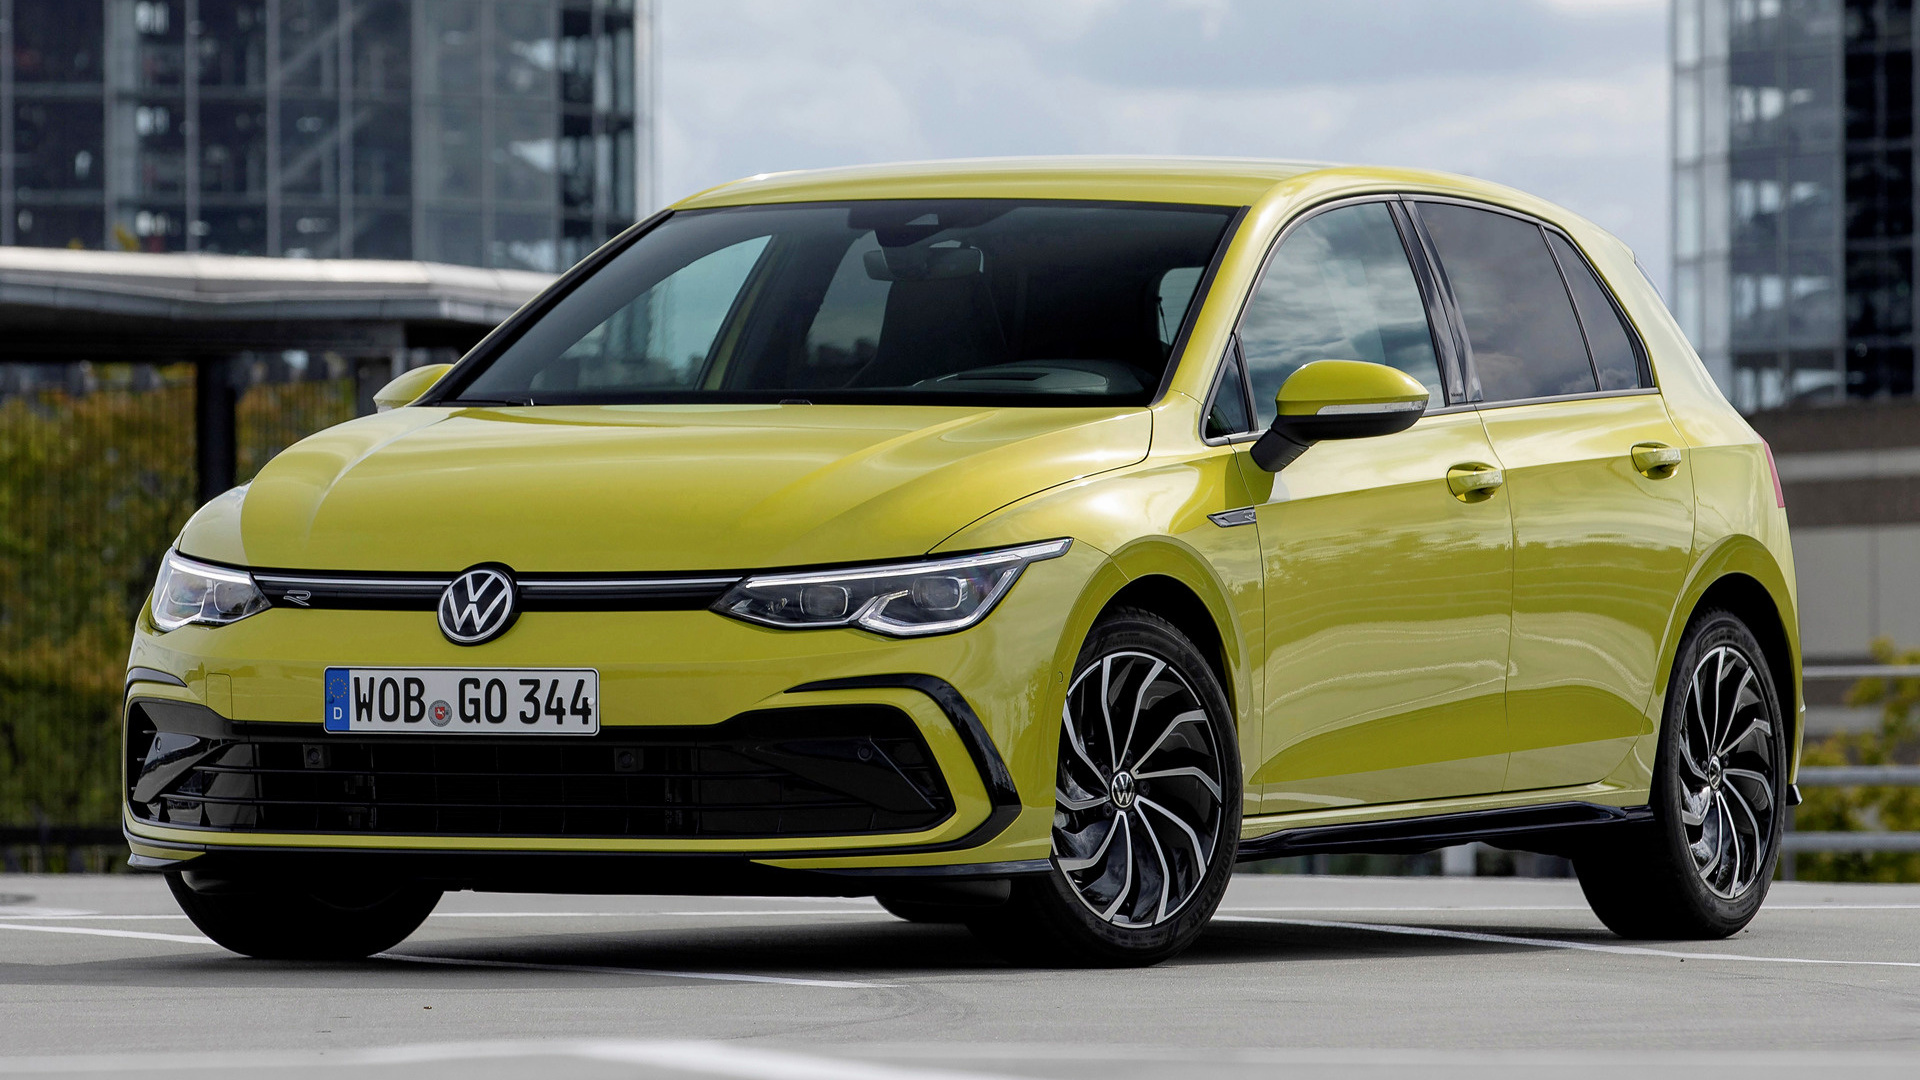 2020 Volkswagen Golf Mild Hybrid RLine Wallpapers and HD Images